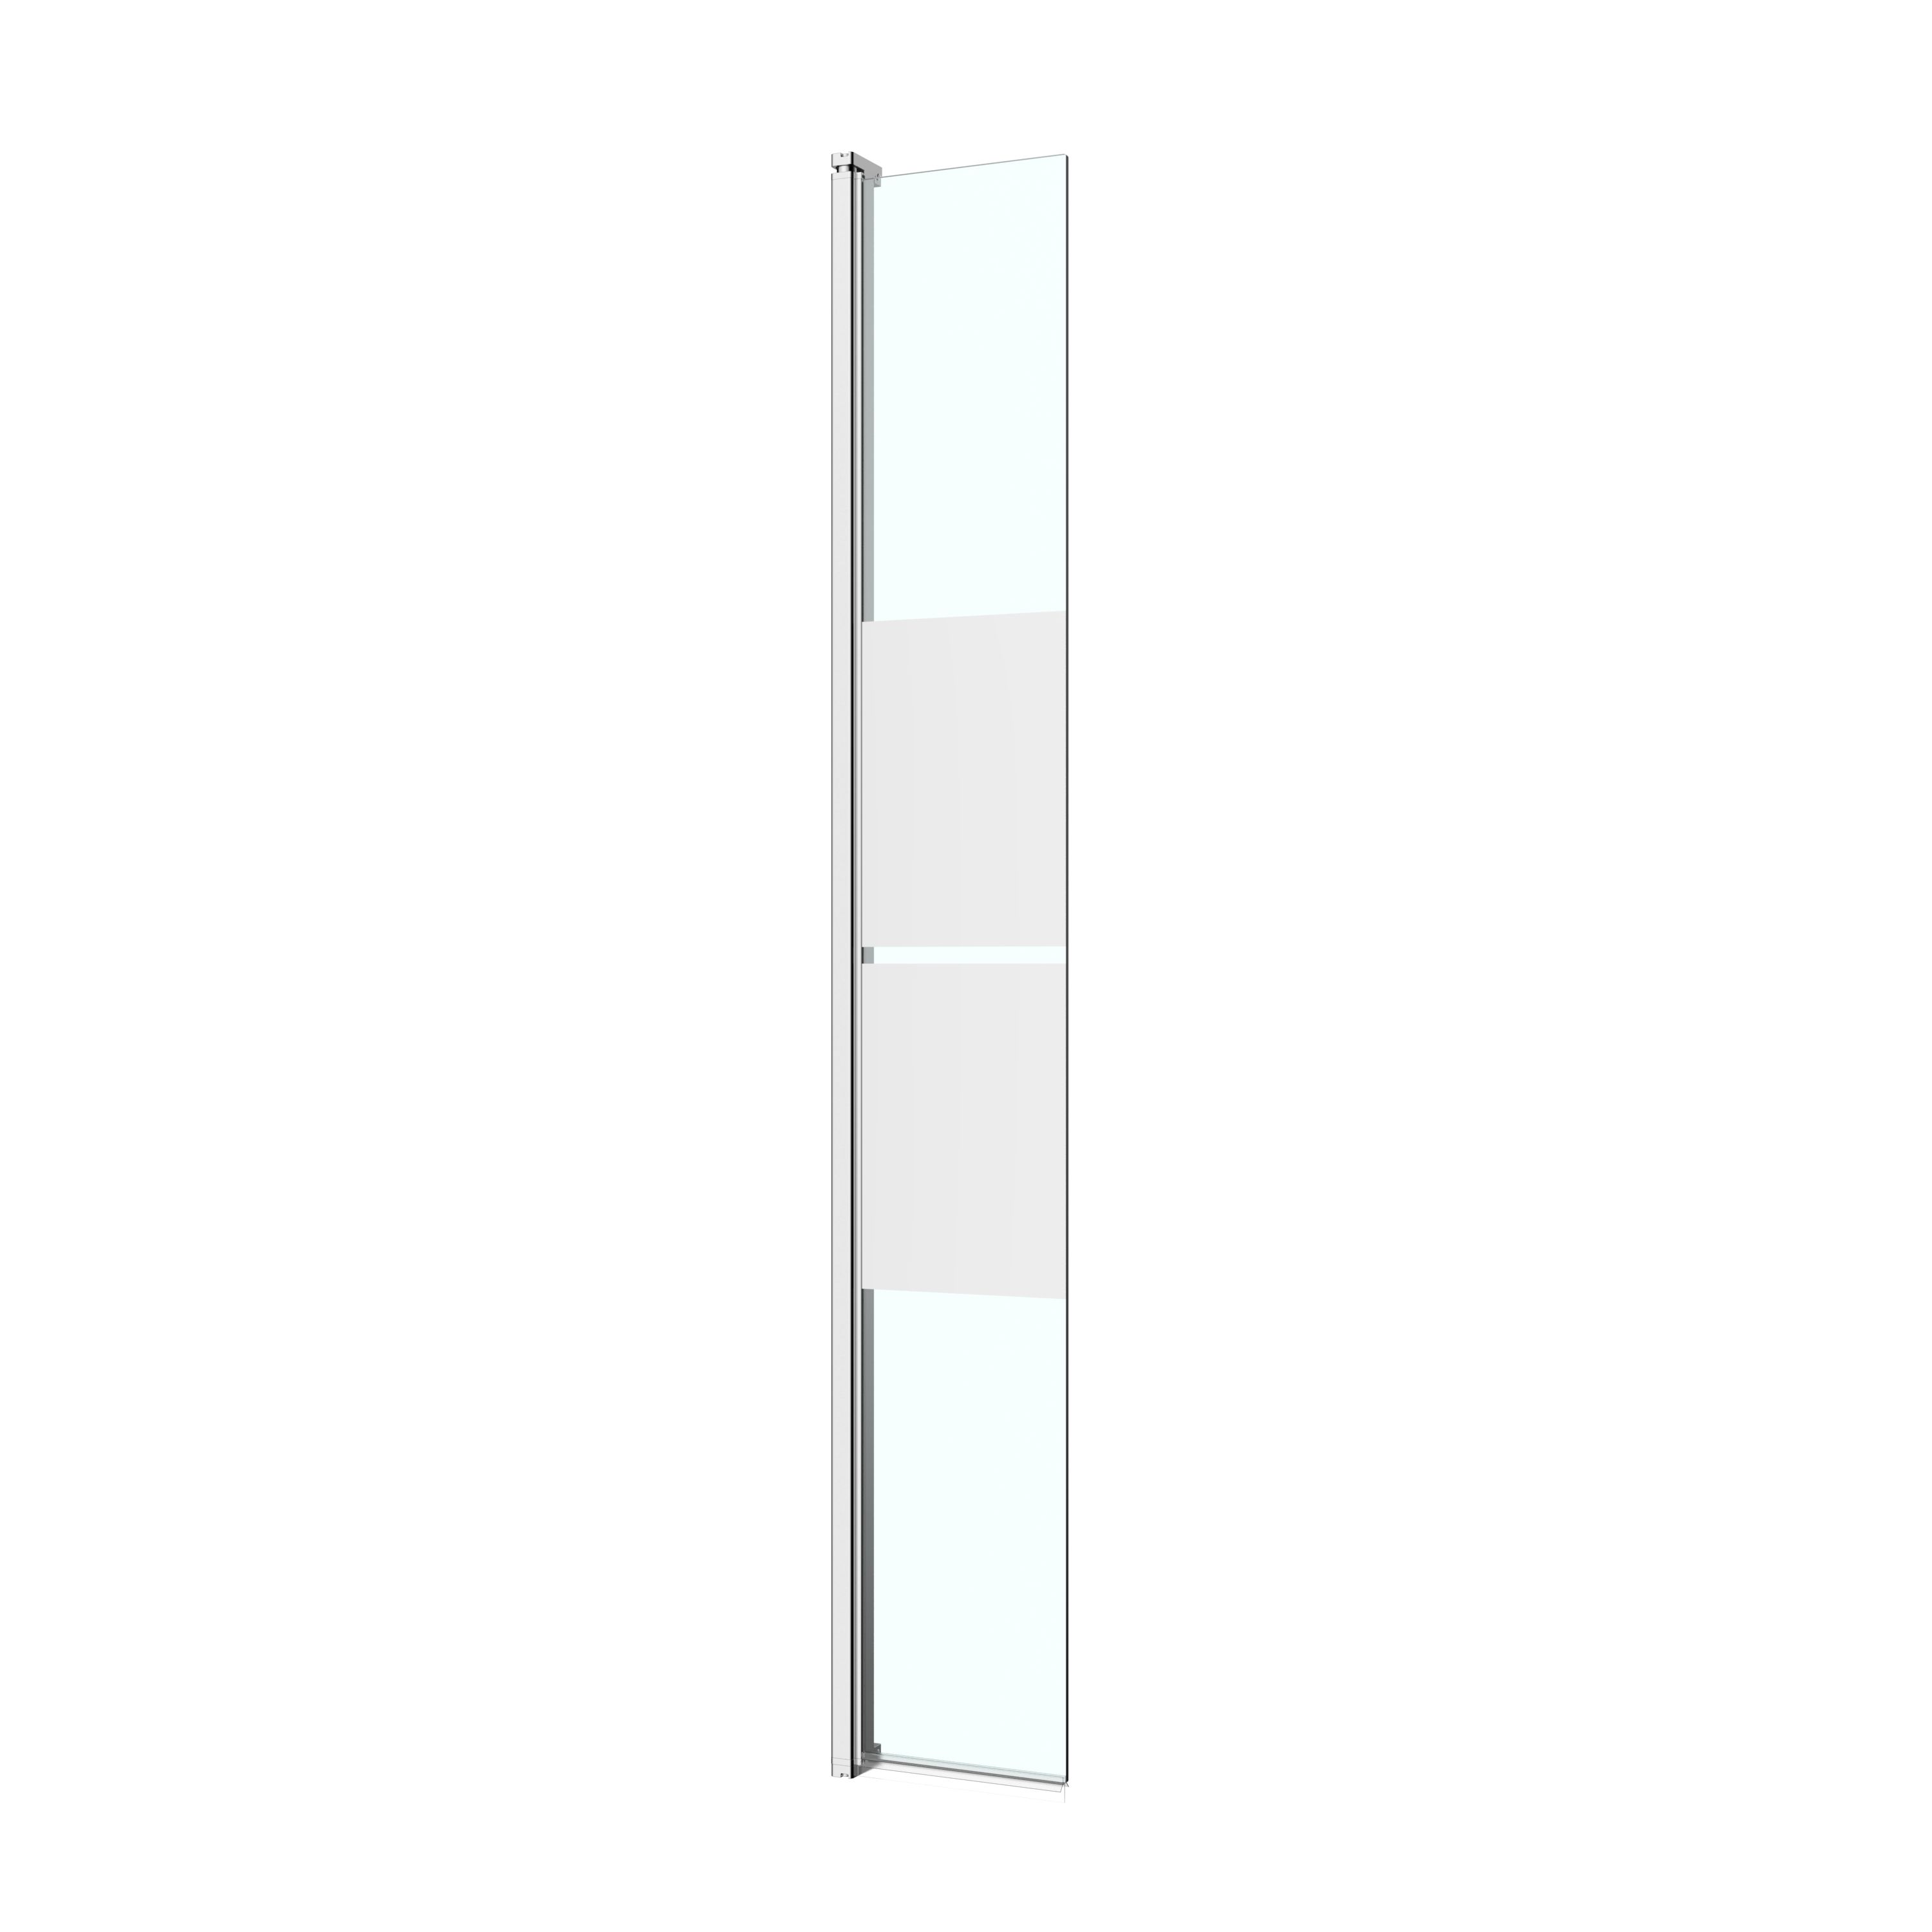 GoodHome Ledava Gloss Chrome Mirror Pivot Front Return panel (H)195cm (W)30cm